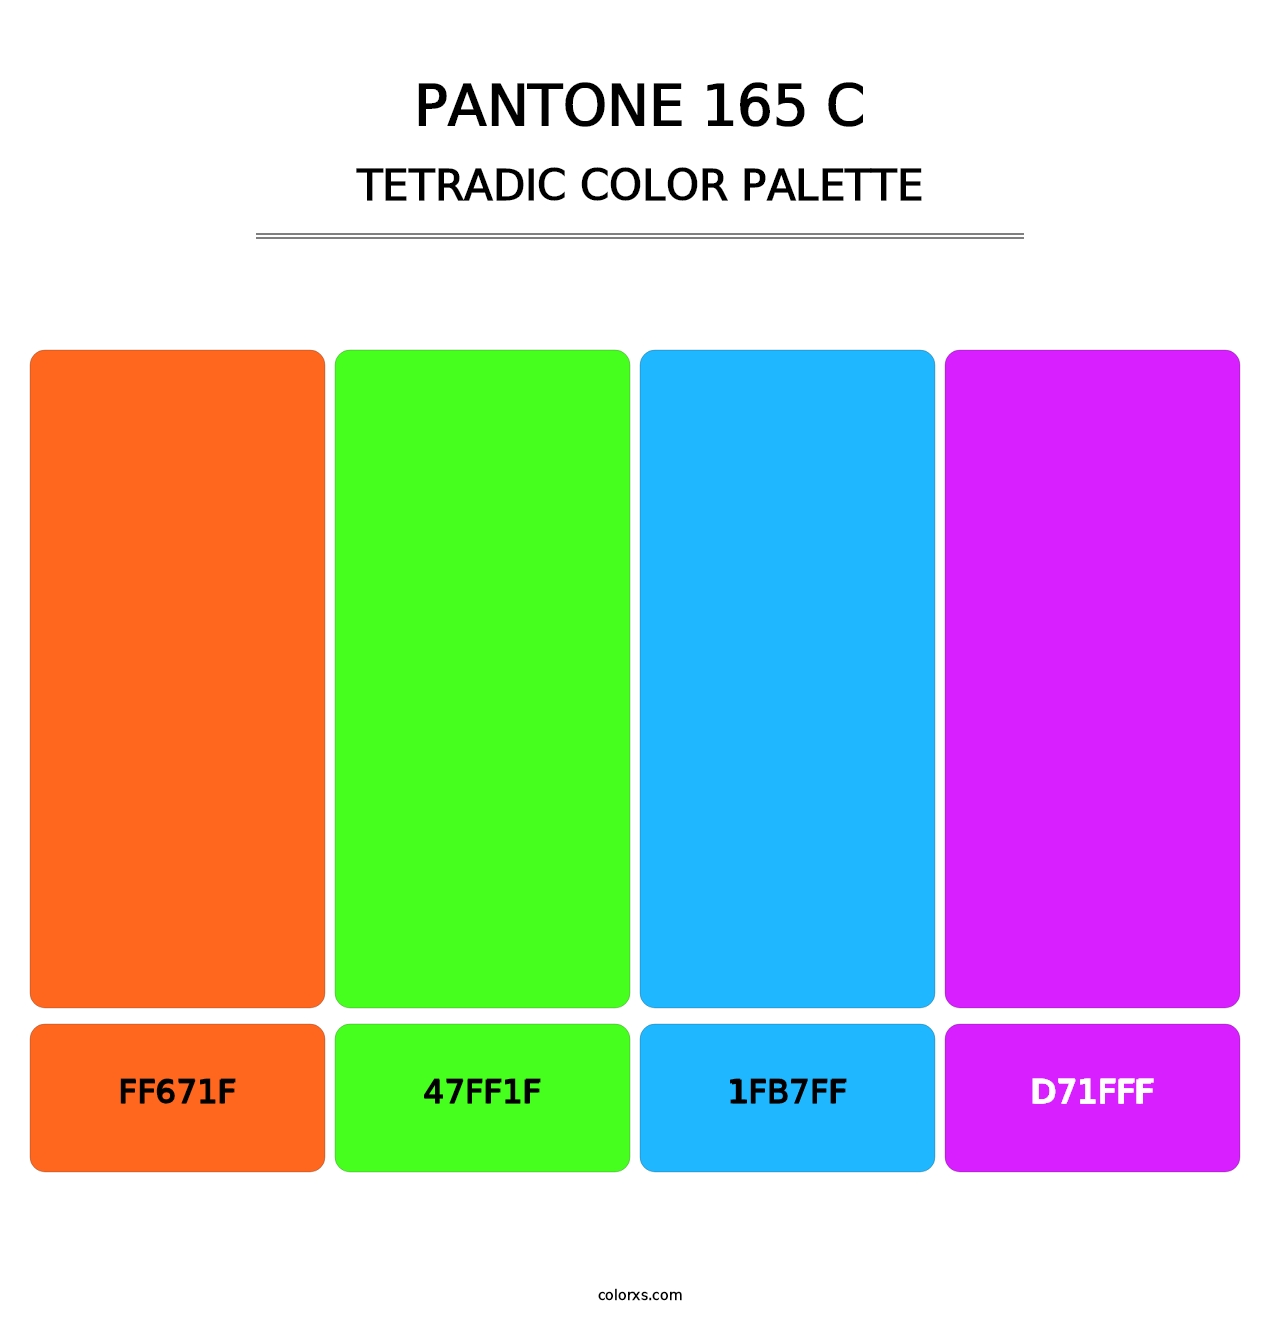 PANTONE 165 C - Tetradic Color Palette